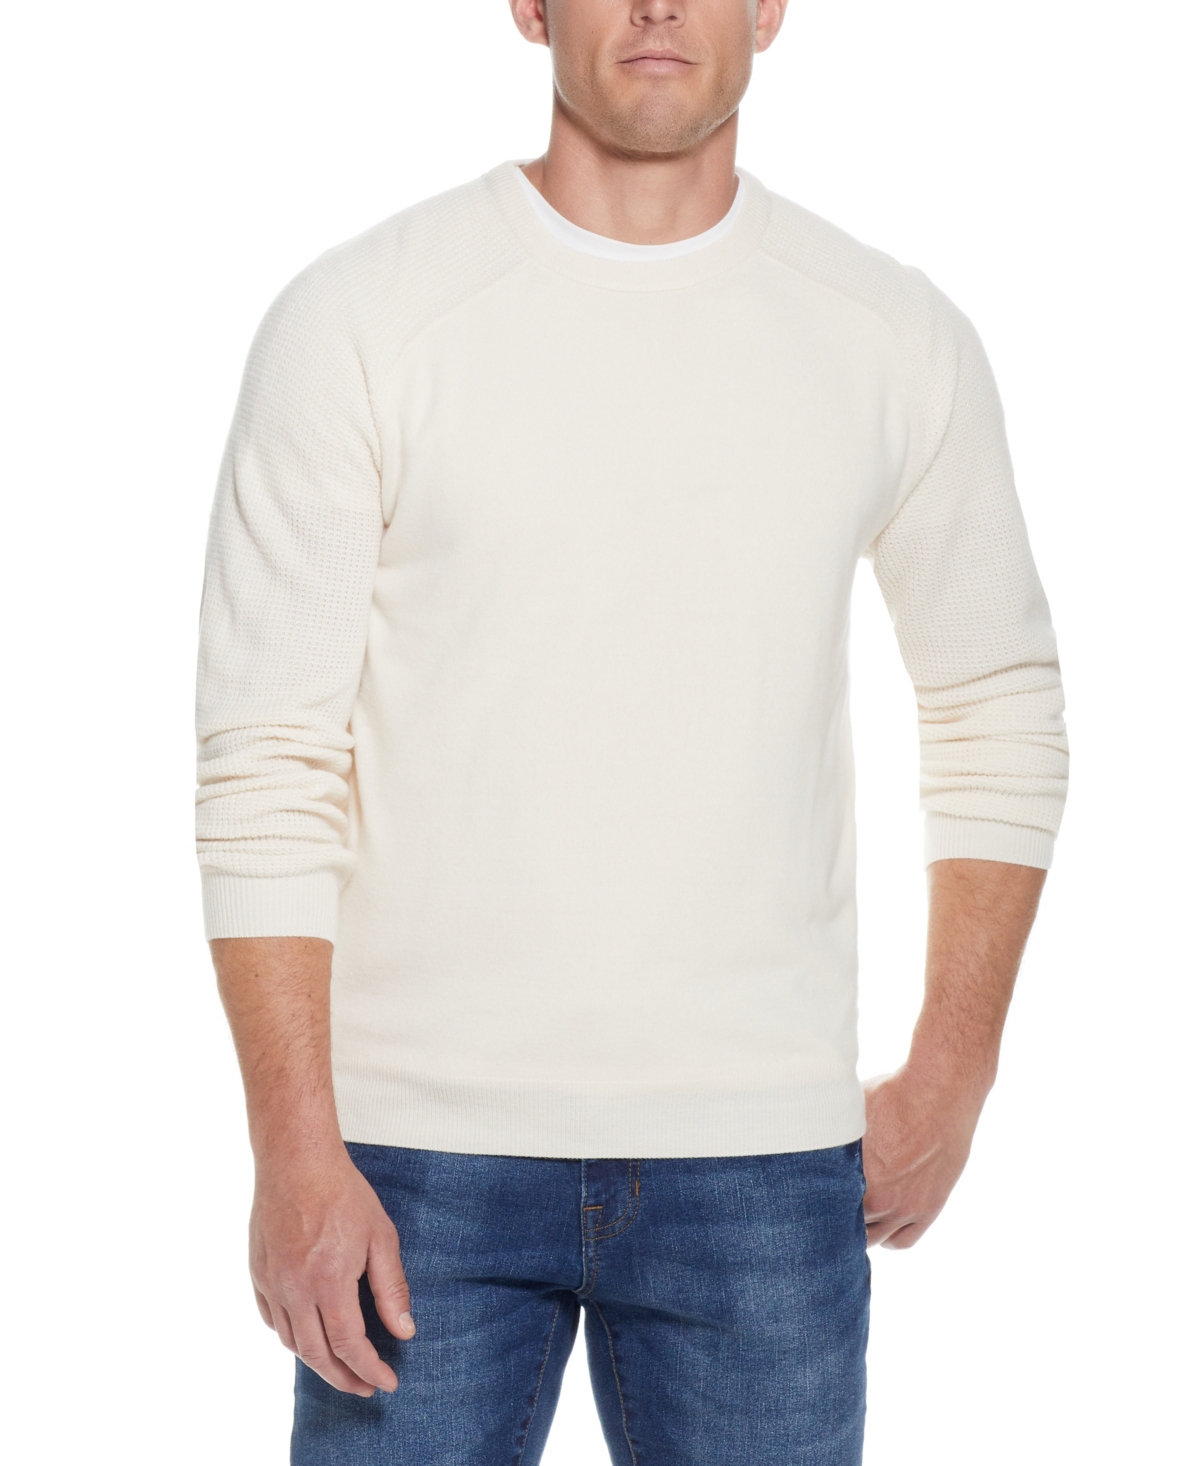 Men's Soft Touch Raglan Crew Neck Sweater - Gray Blue